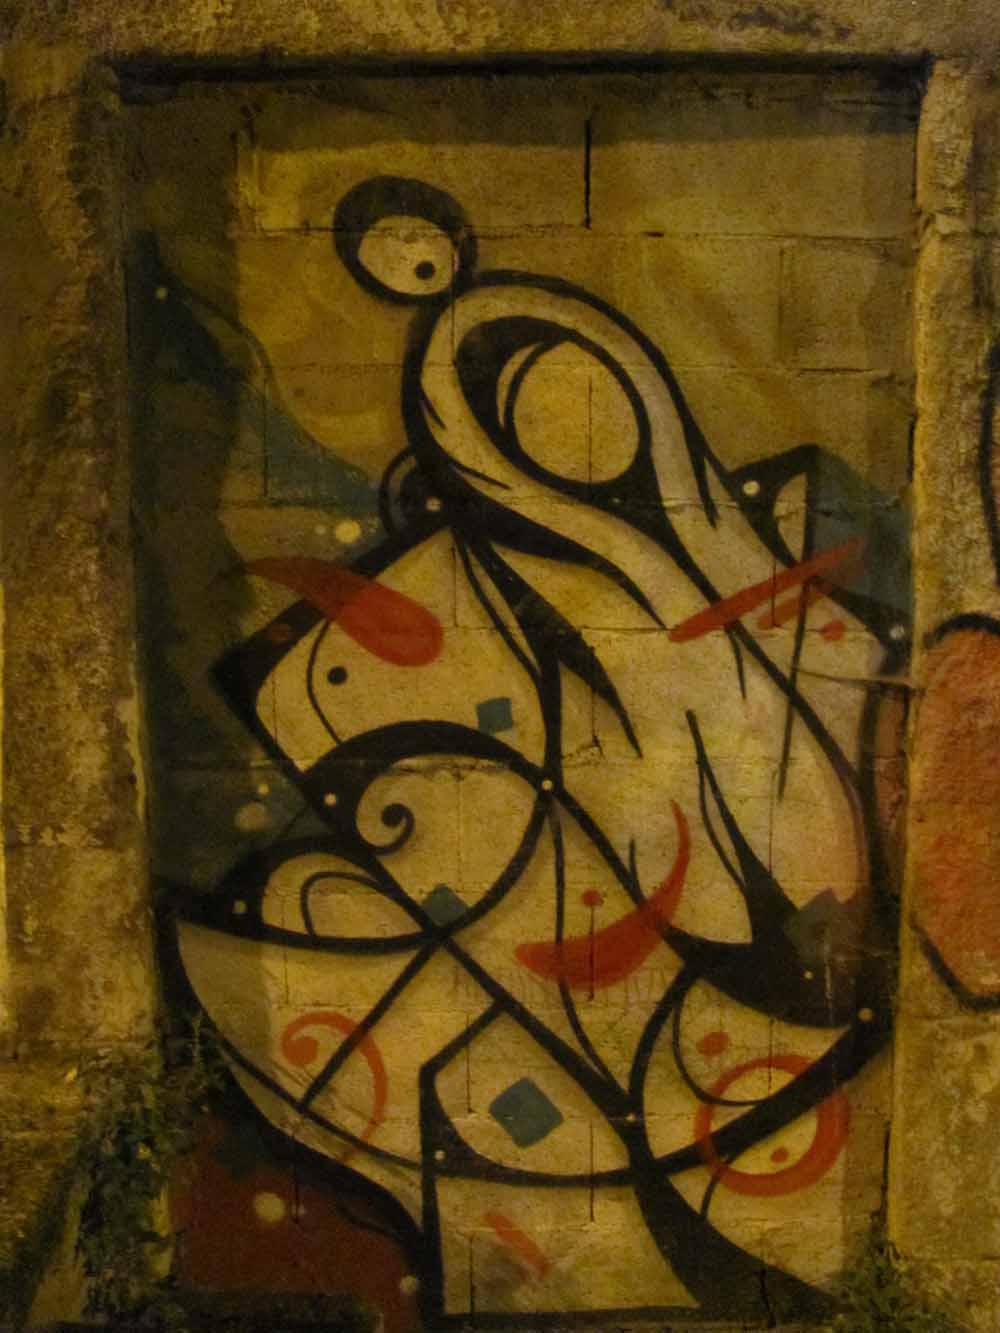 Street art from Porto14